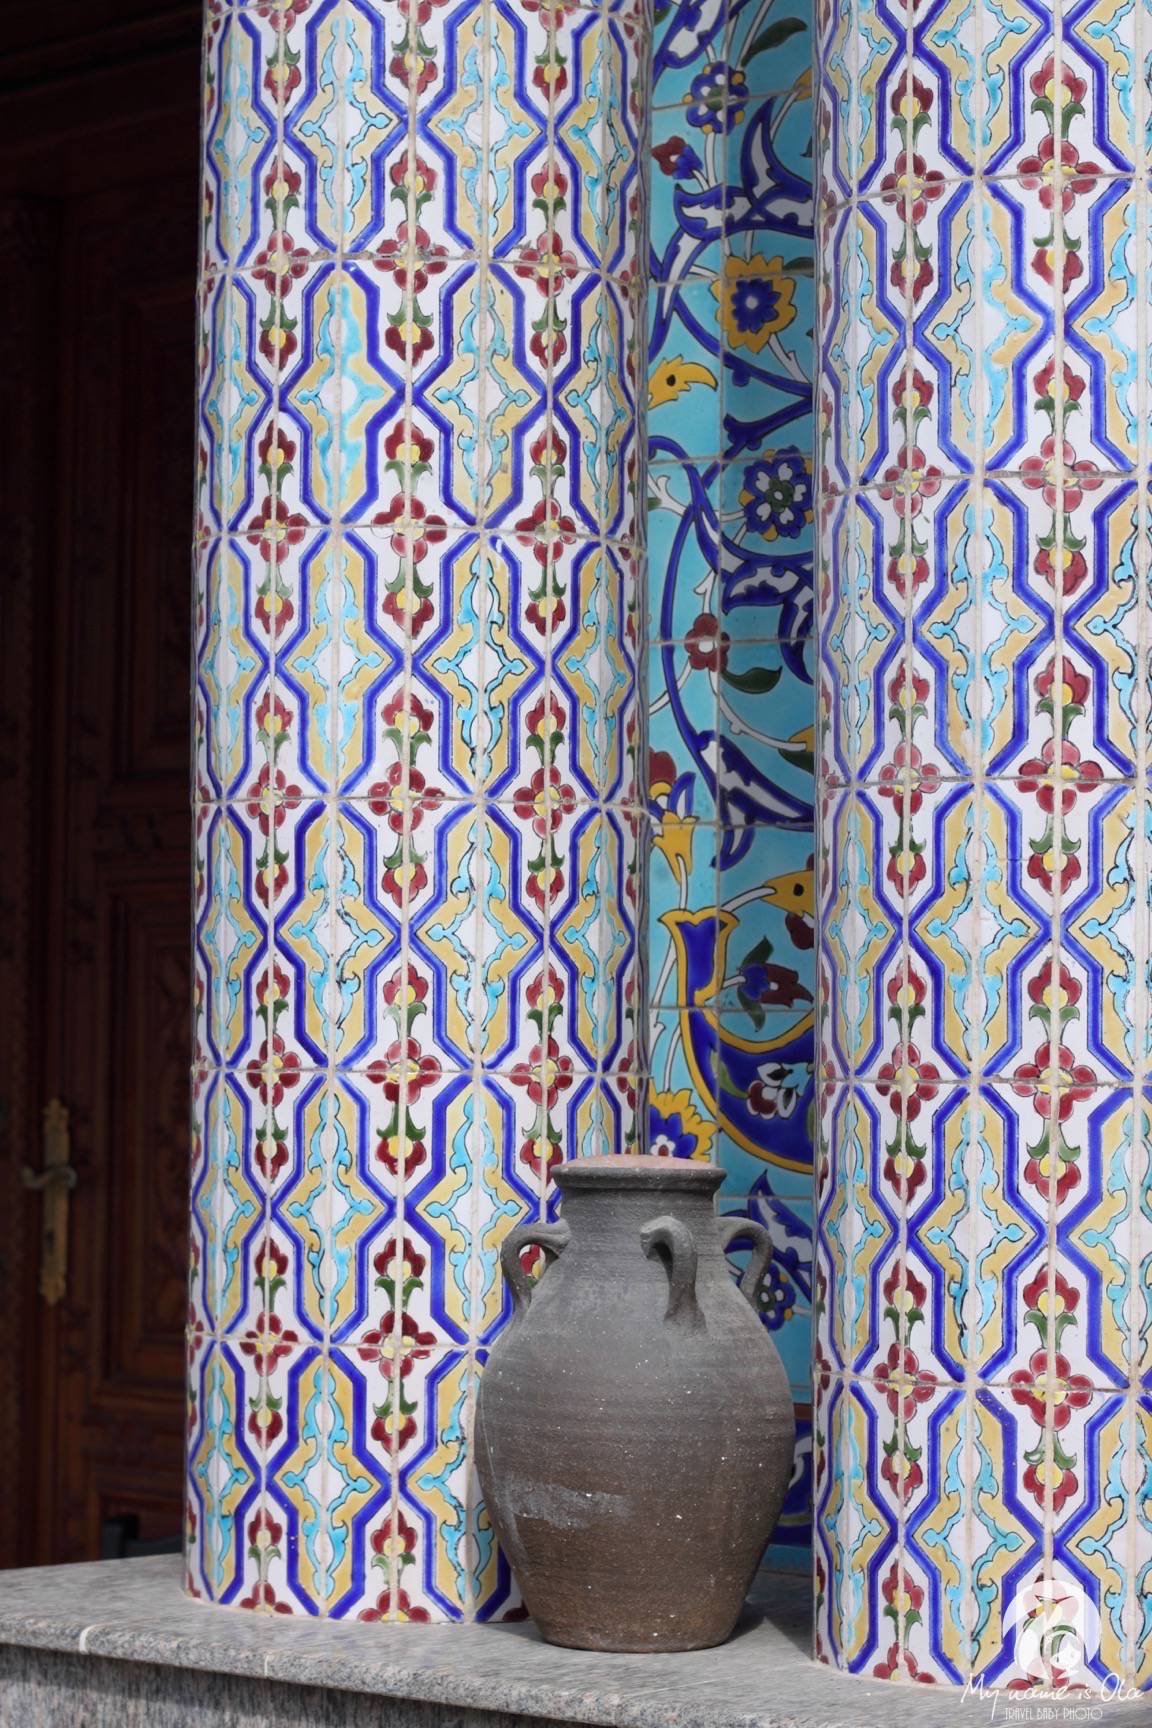 Iranian mosque, Dubai